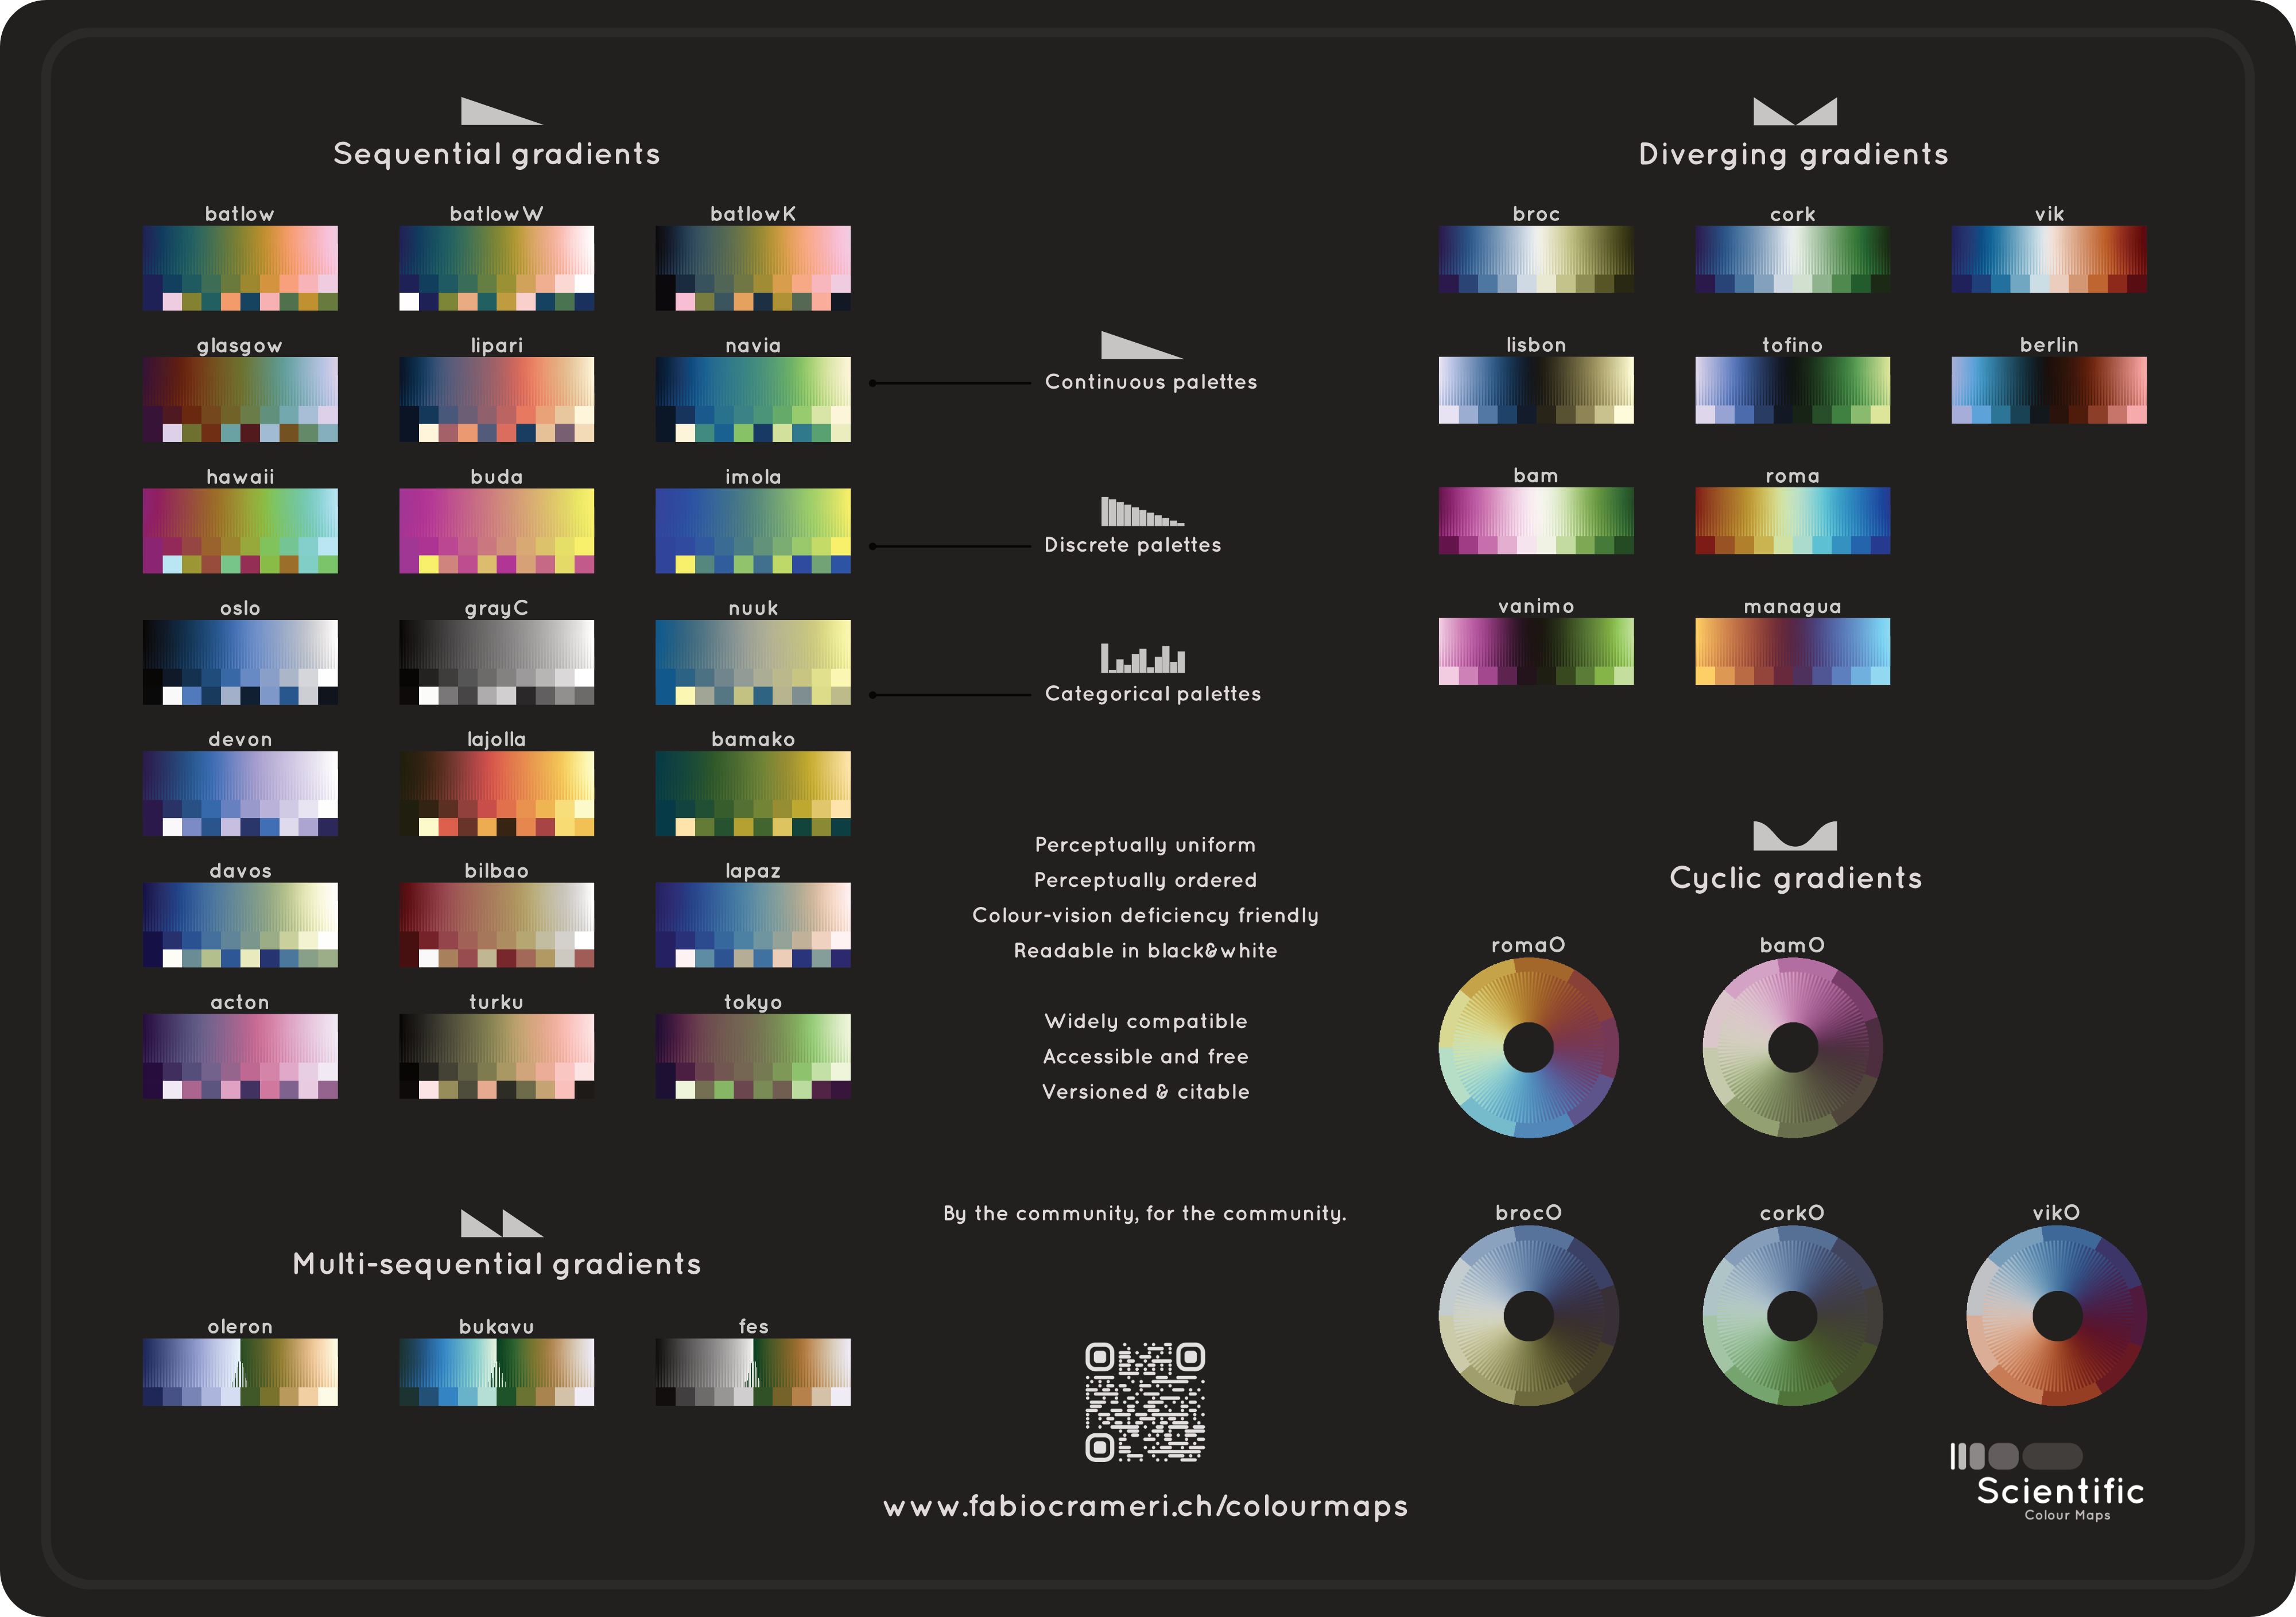 The Scientific colormaps